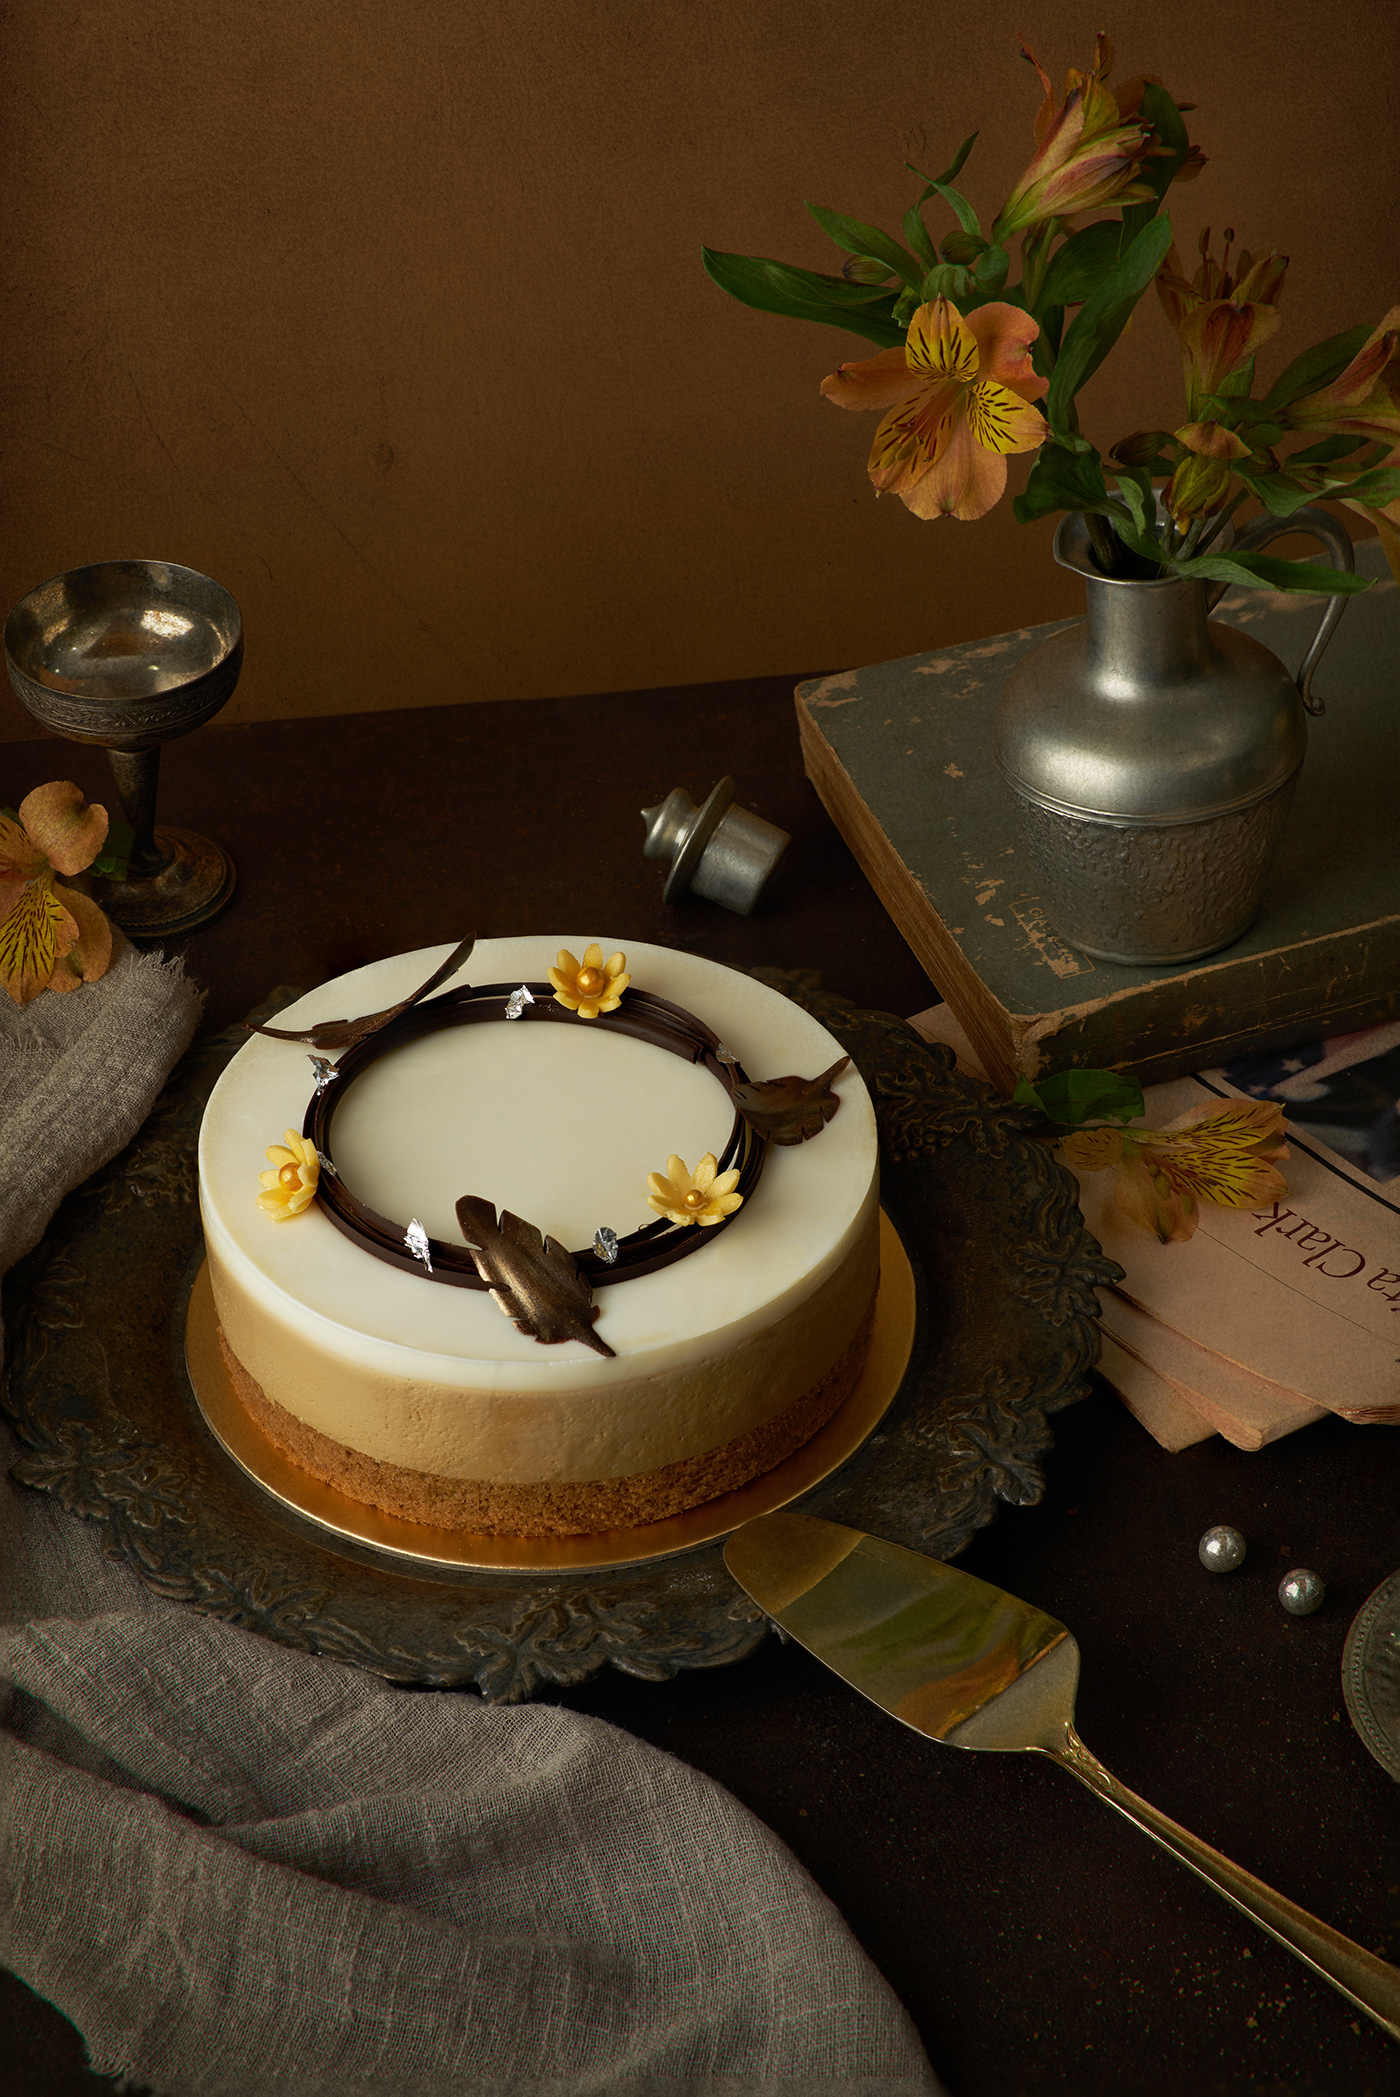 Image may contain: birthday cake, cake and dessert